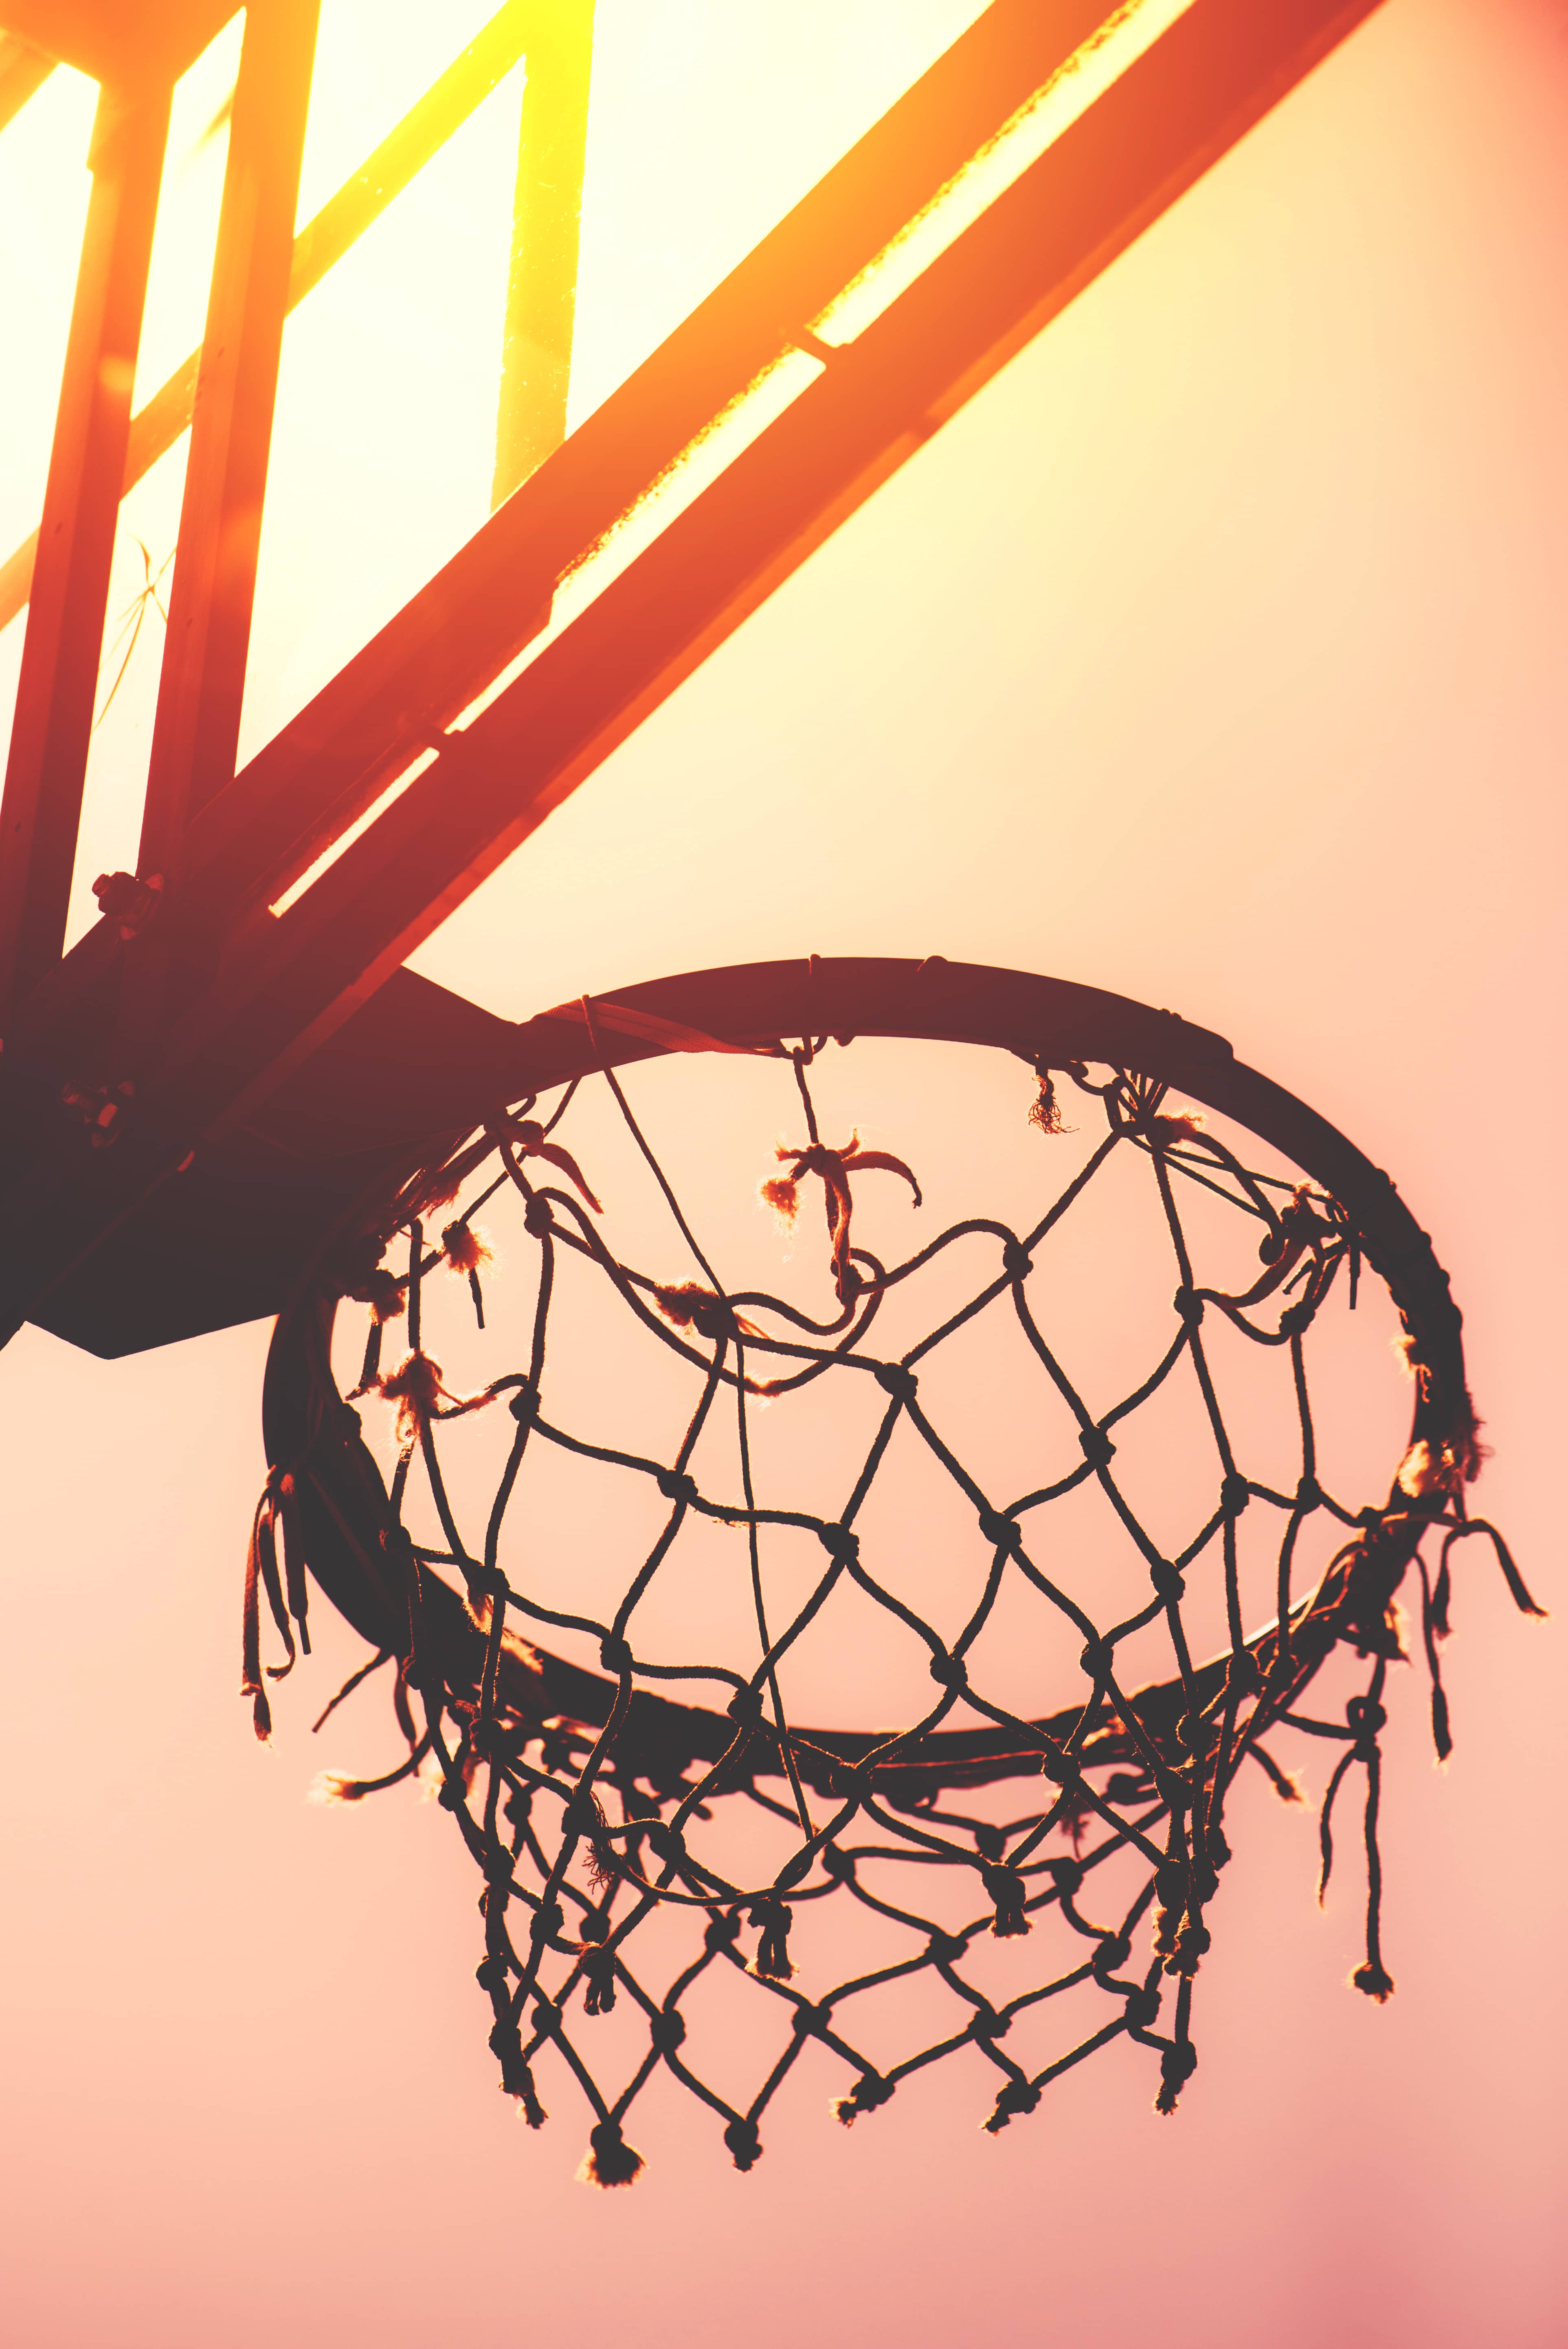 basketball-hoop-on-amateur-outdoor-basketball-court-3